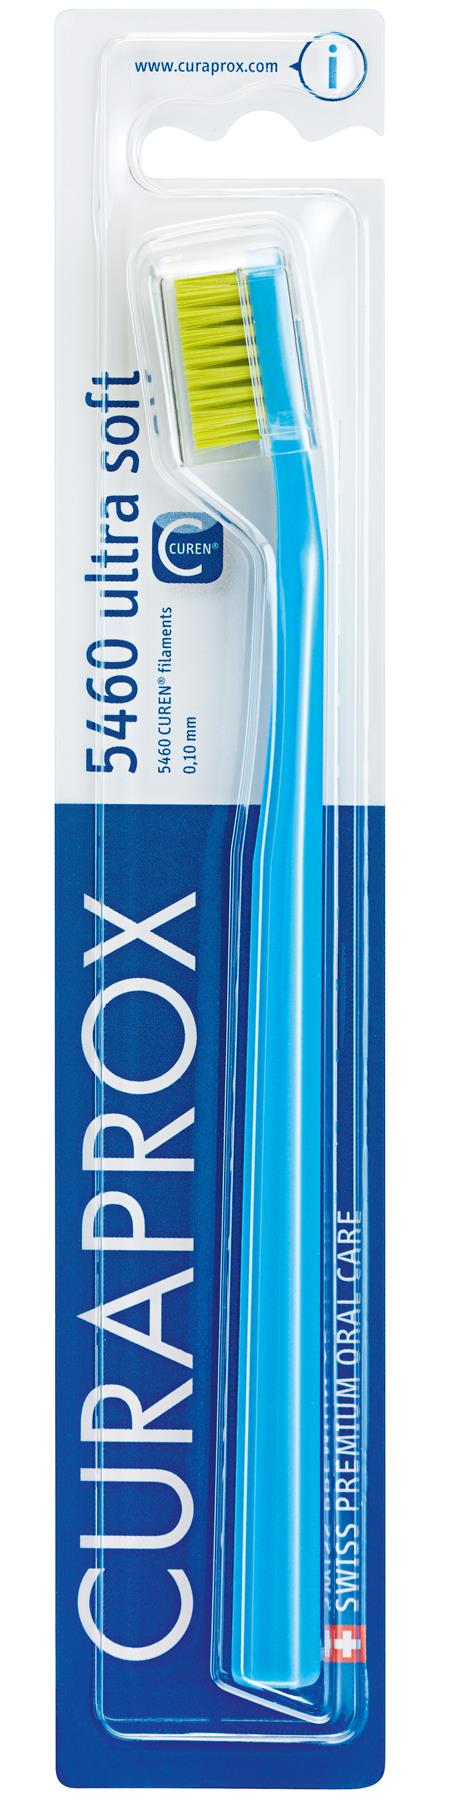 Curaprox Sensitive Ultrasoft Toothbrush CS5460